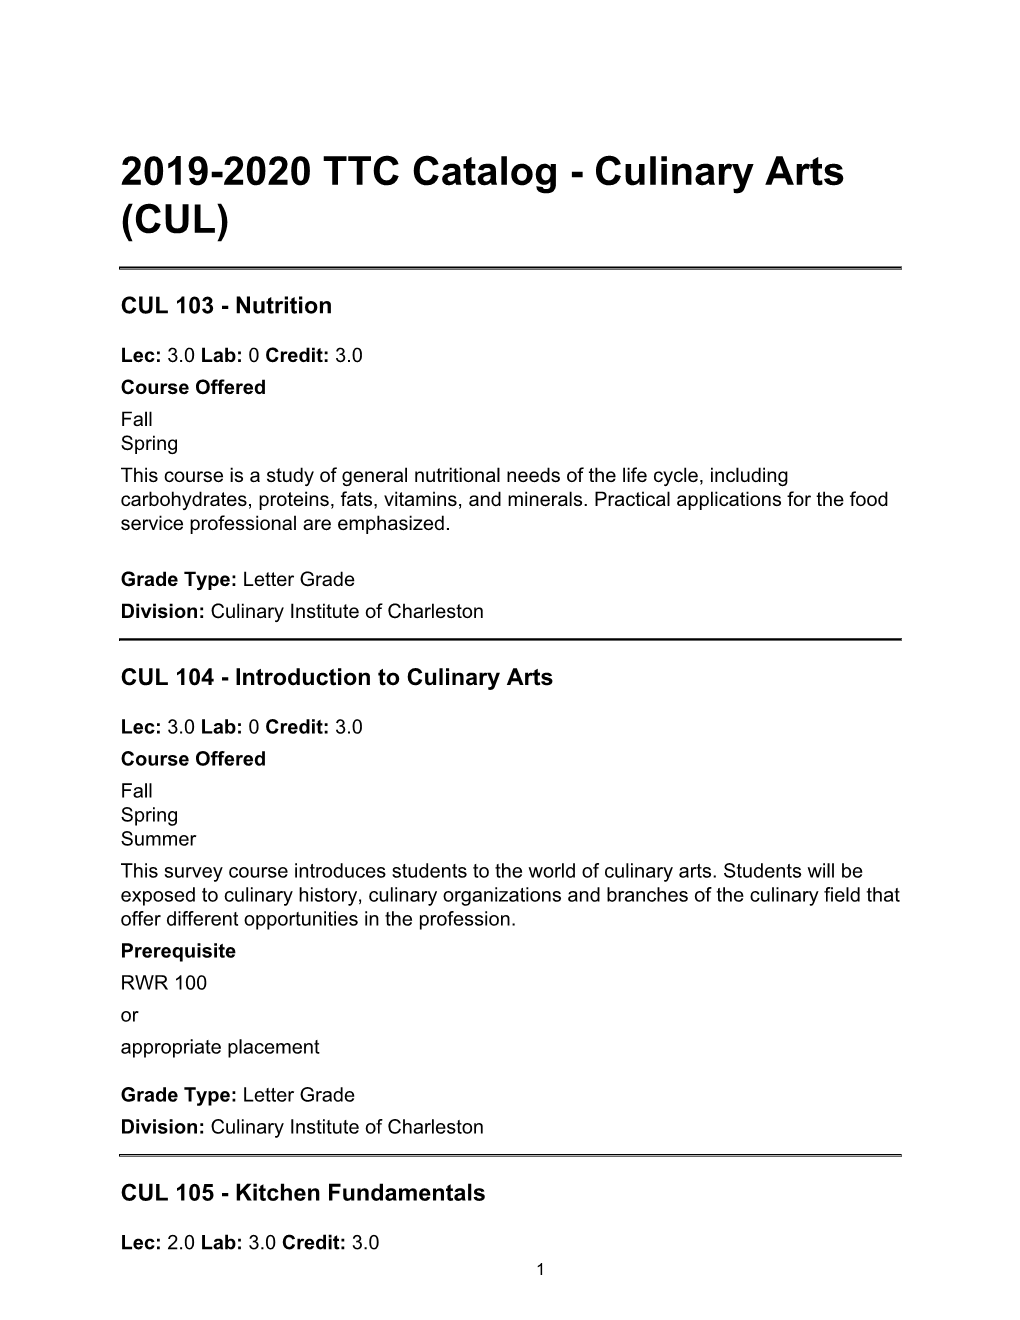 2019-2020 TTC Catalog - Culinary Arts (CUL)